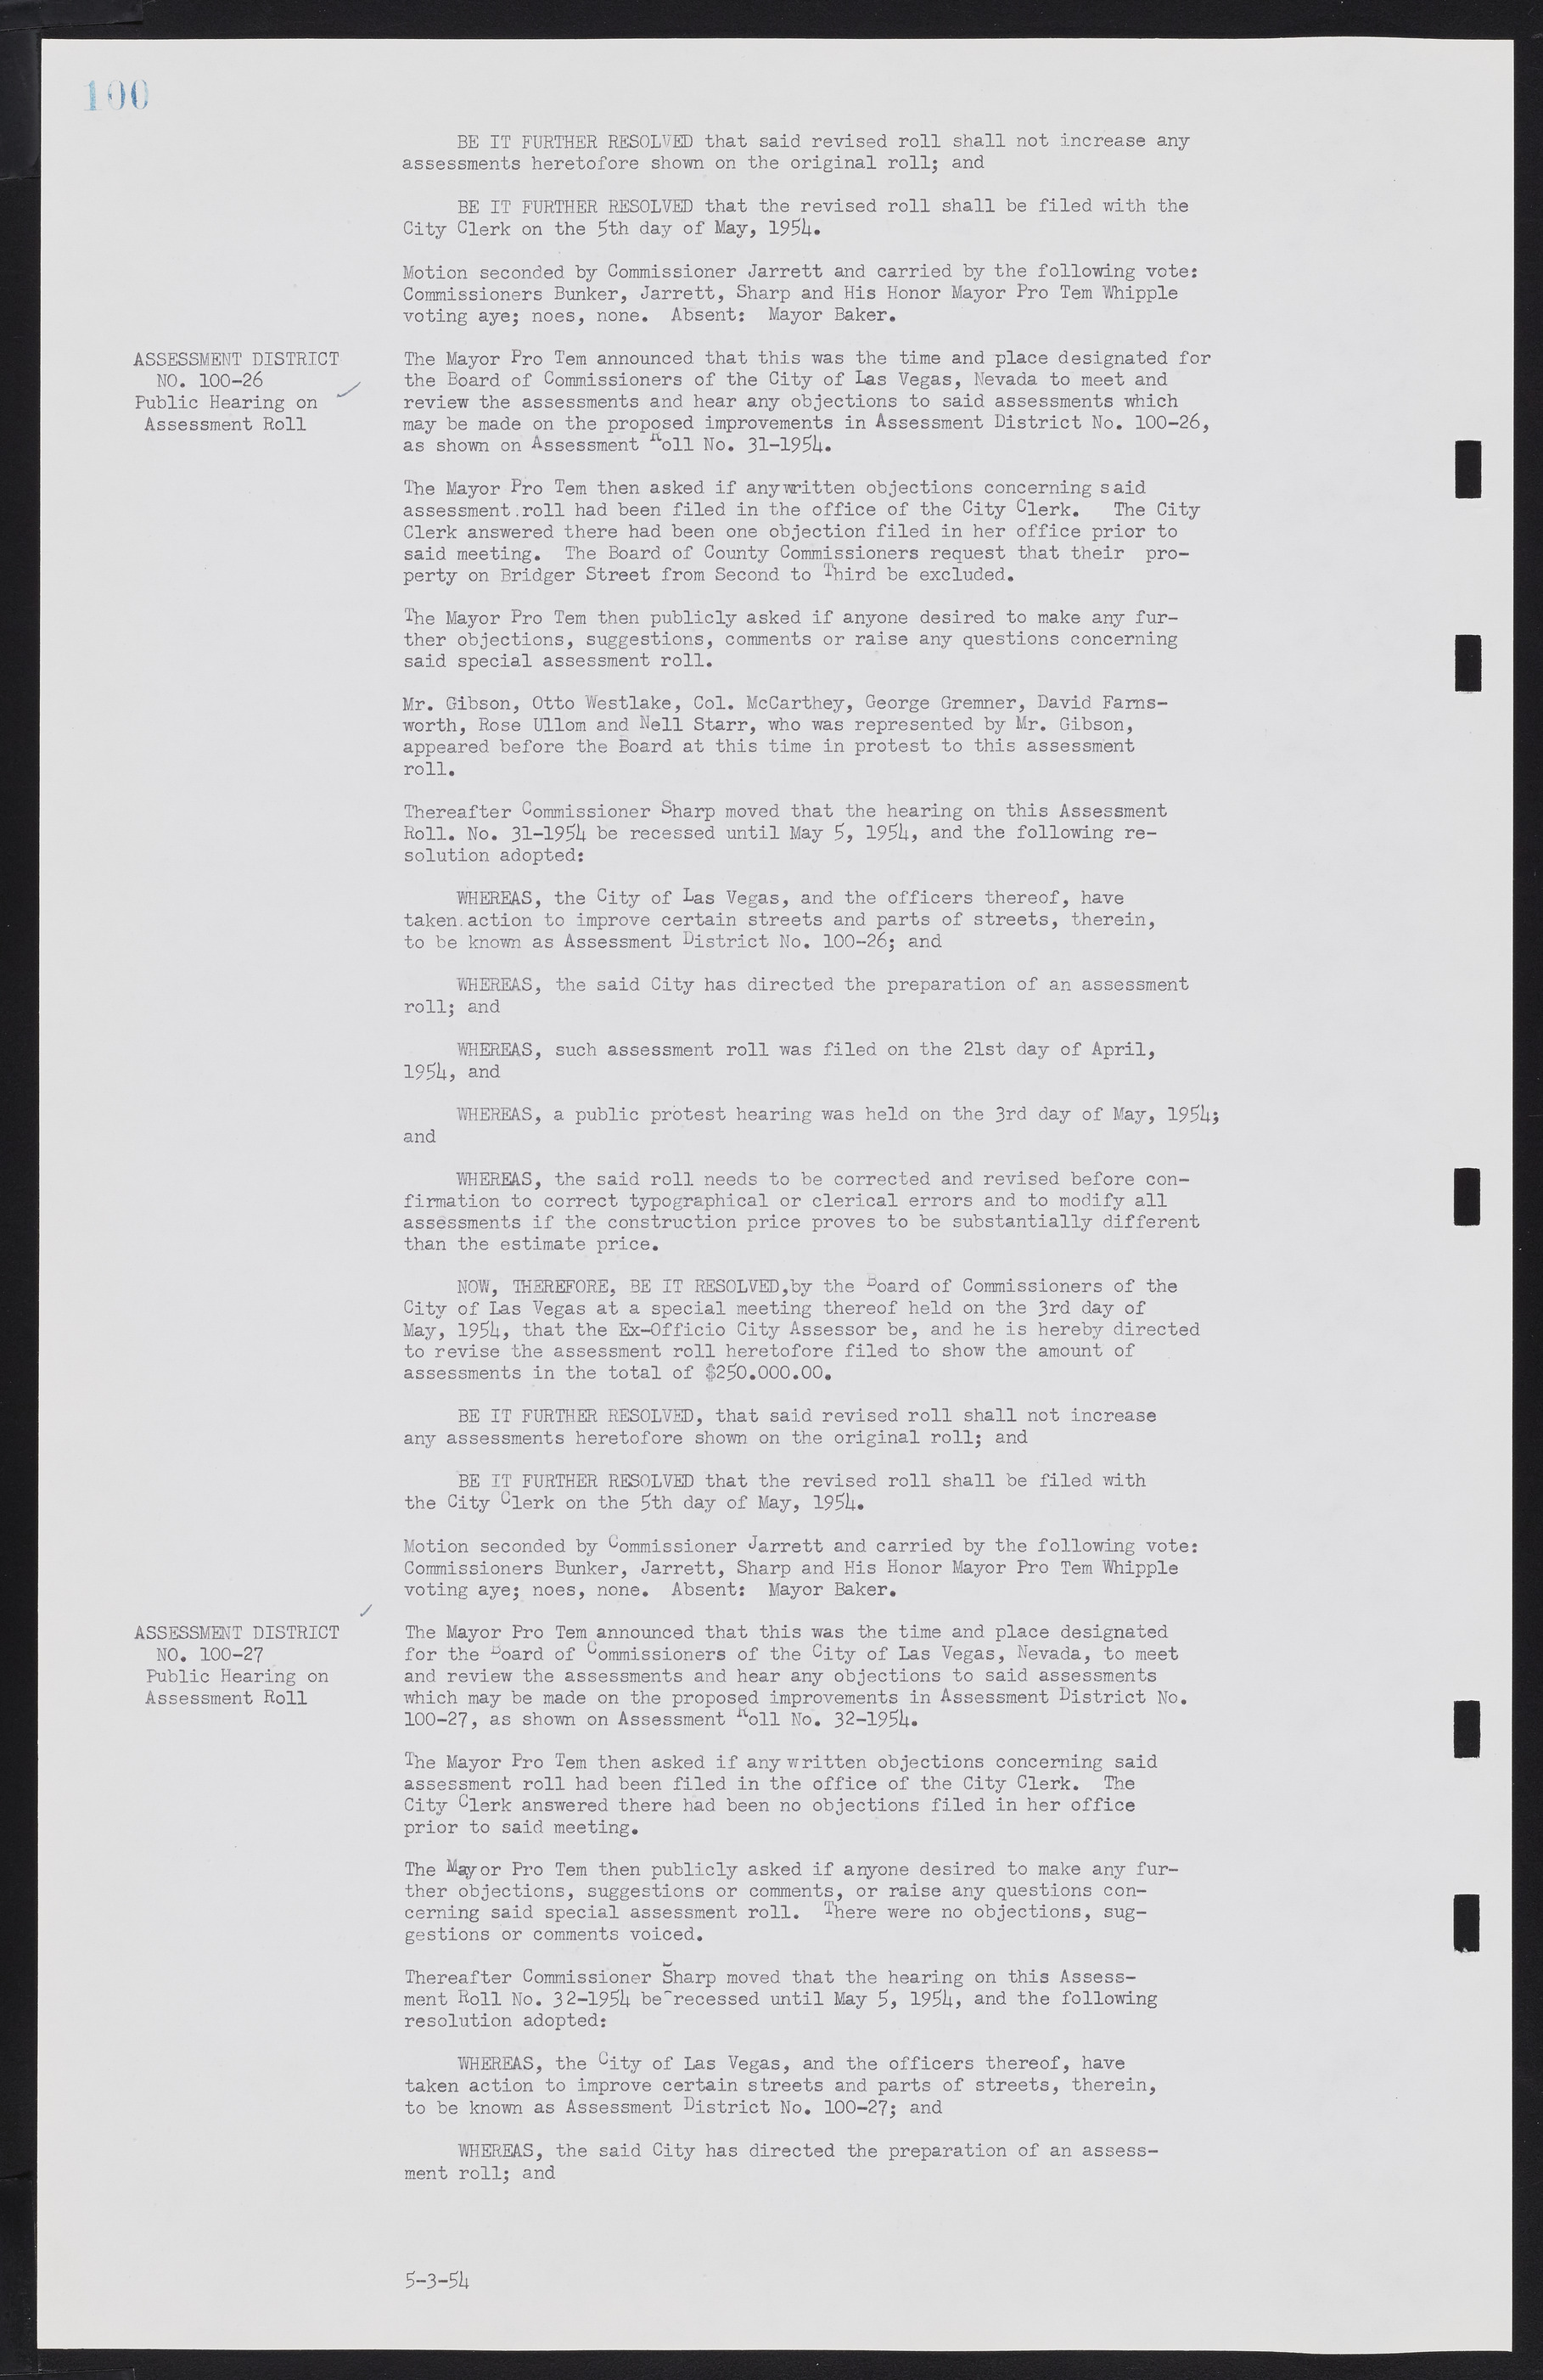 Las Vegas City Commission Minutes, February 17, 1954 to September 21, 1955, lvc000009-104